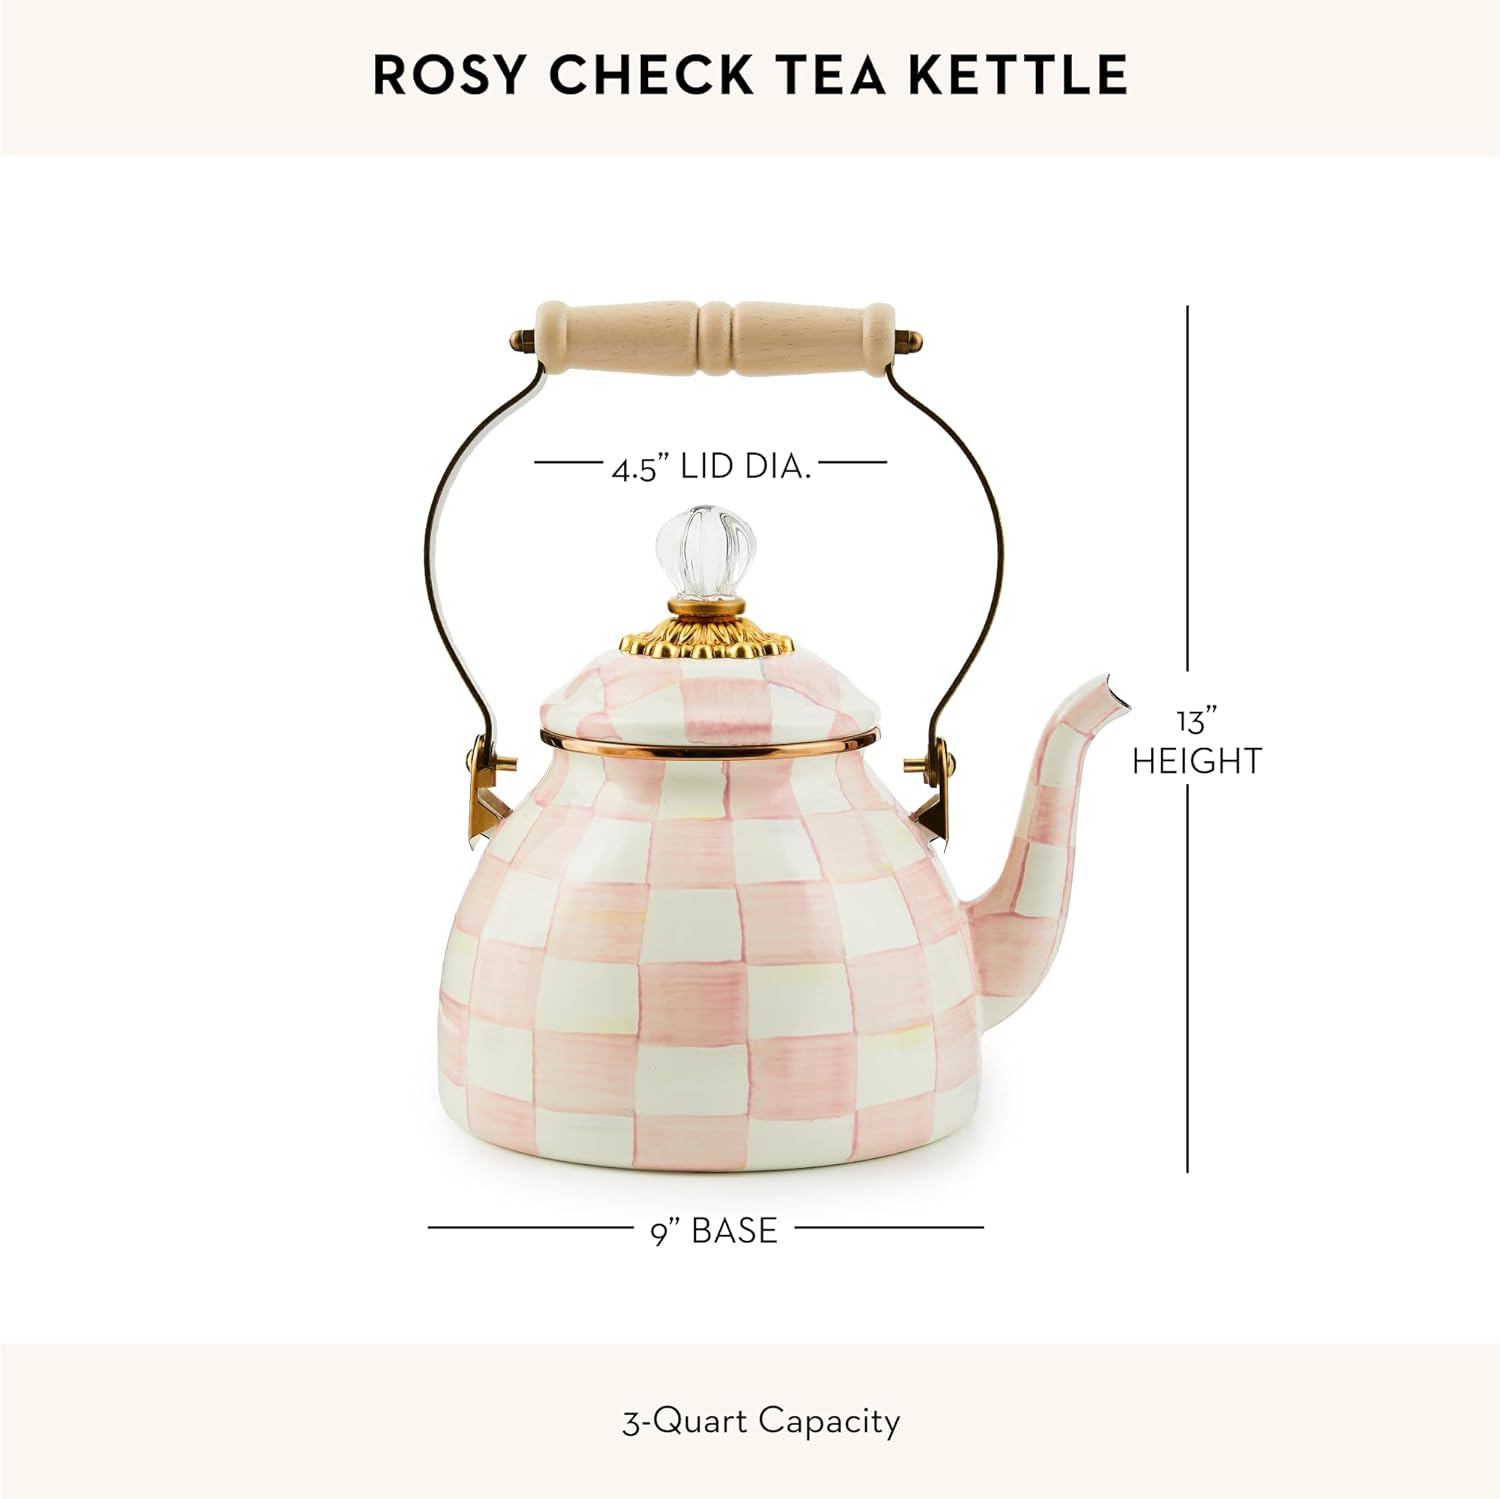 (⭐⭐ HOT SALE NOW) MACKENZIE-CHILDS Rosy Check Enamel Tea Kettle, Decorative Tea Kettle, 3-Quart Capacity